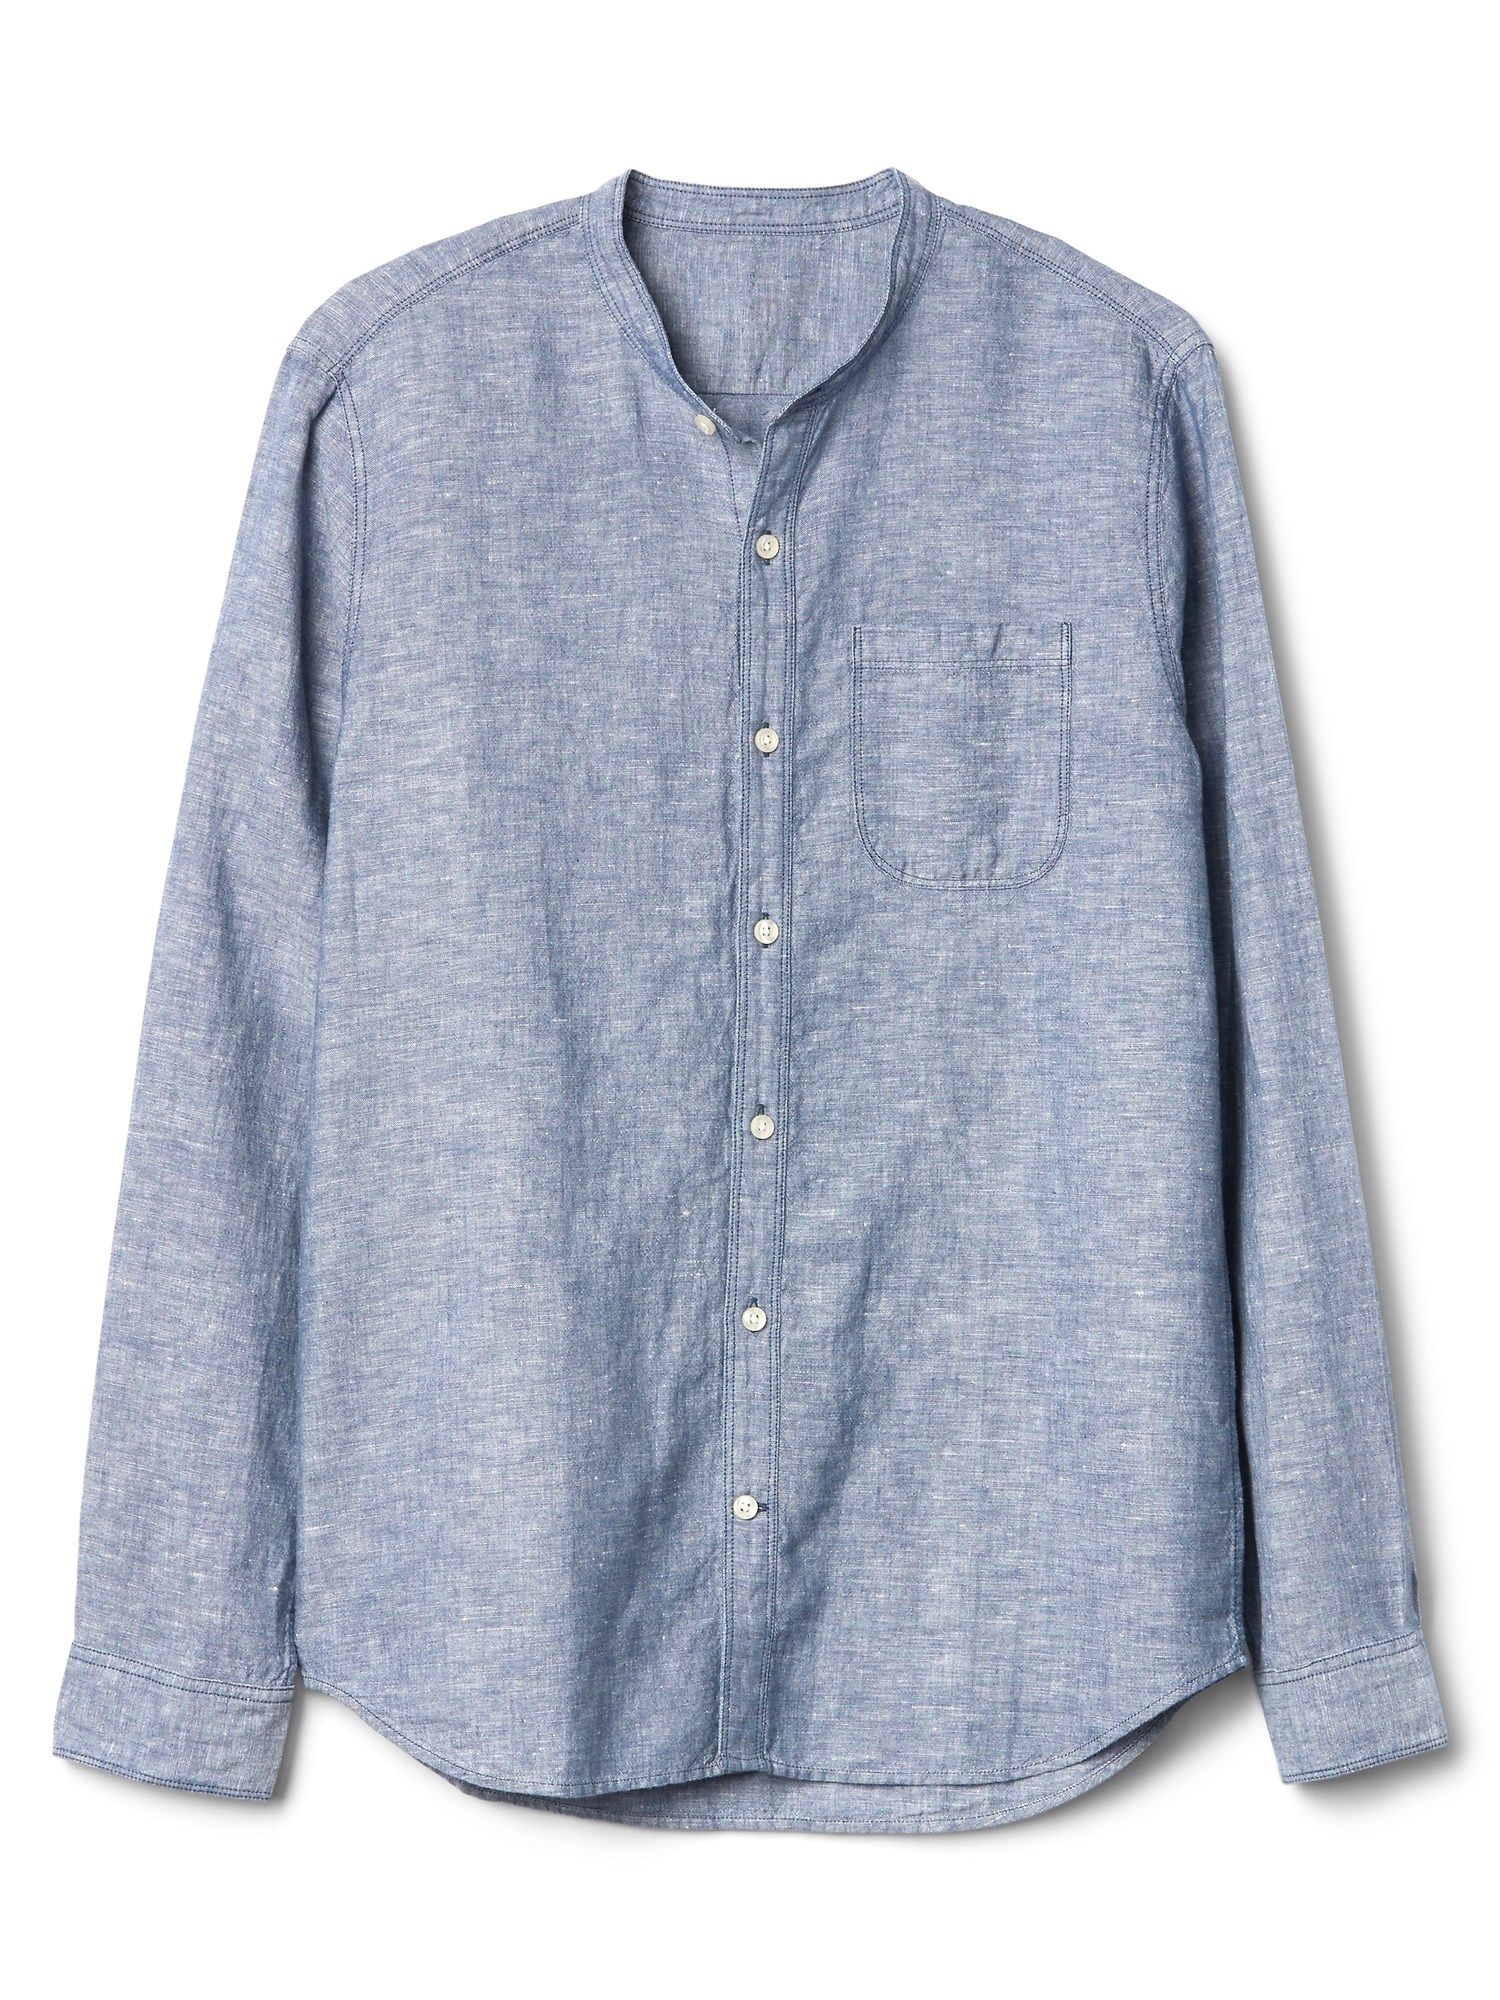 Standard Fit Band Collar Shirt in Linen-Cotton 